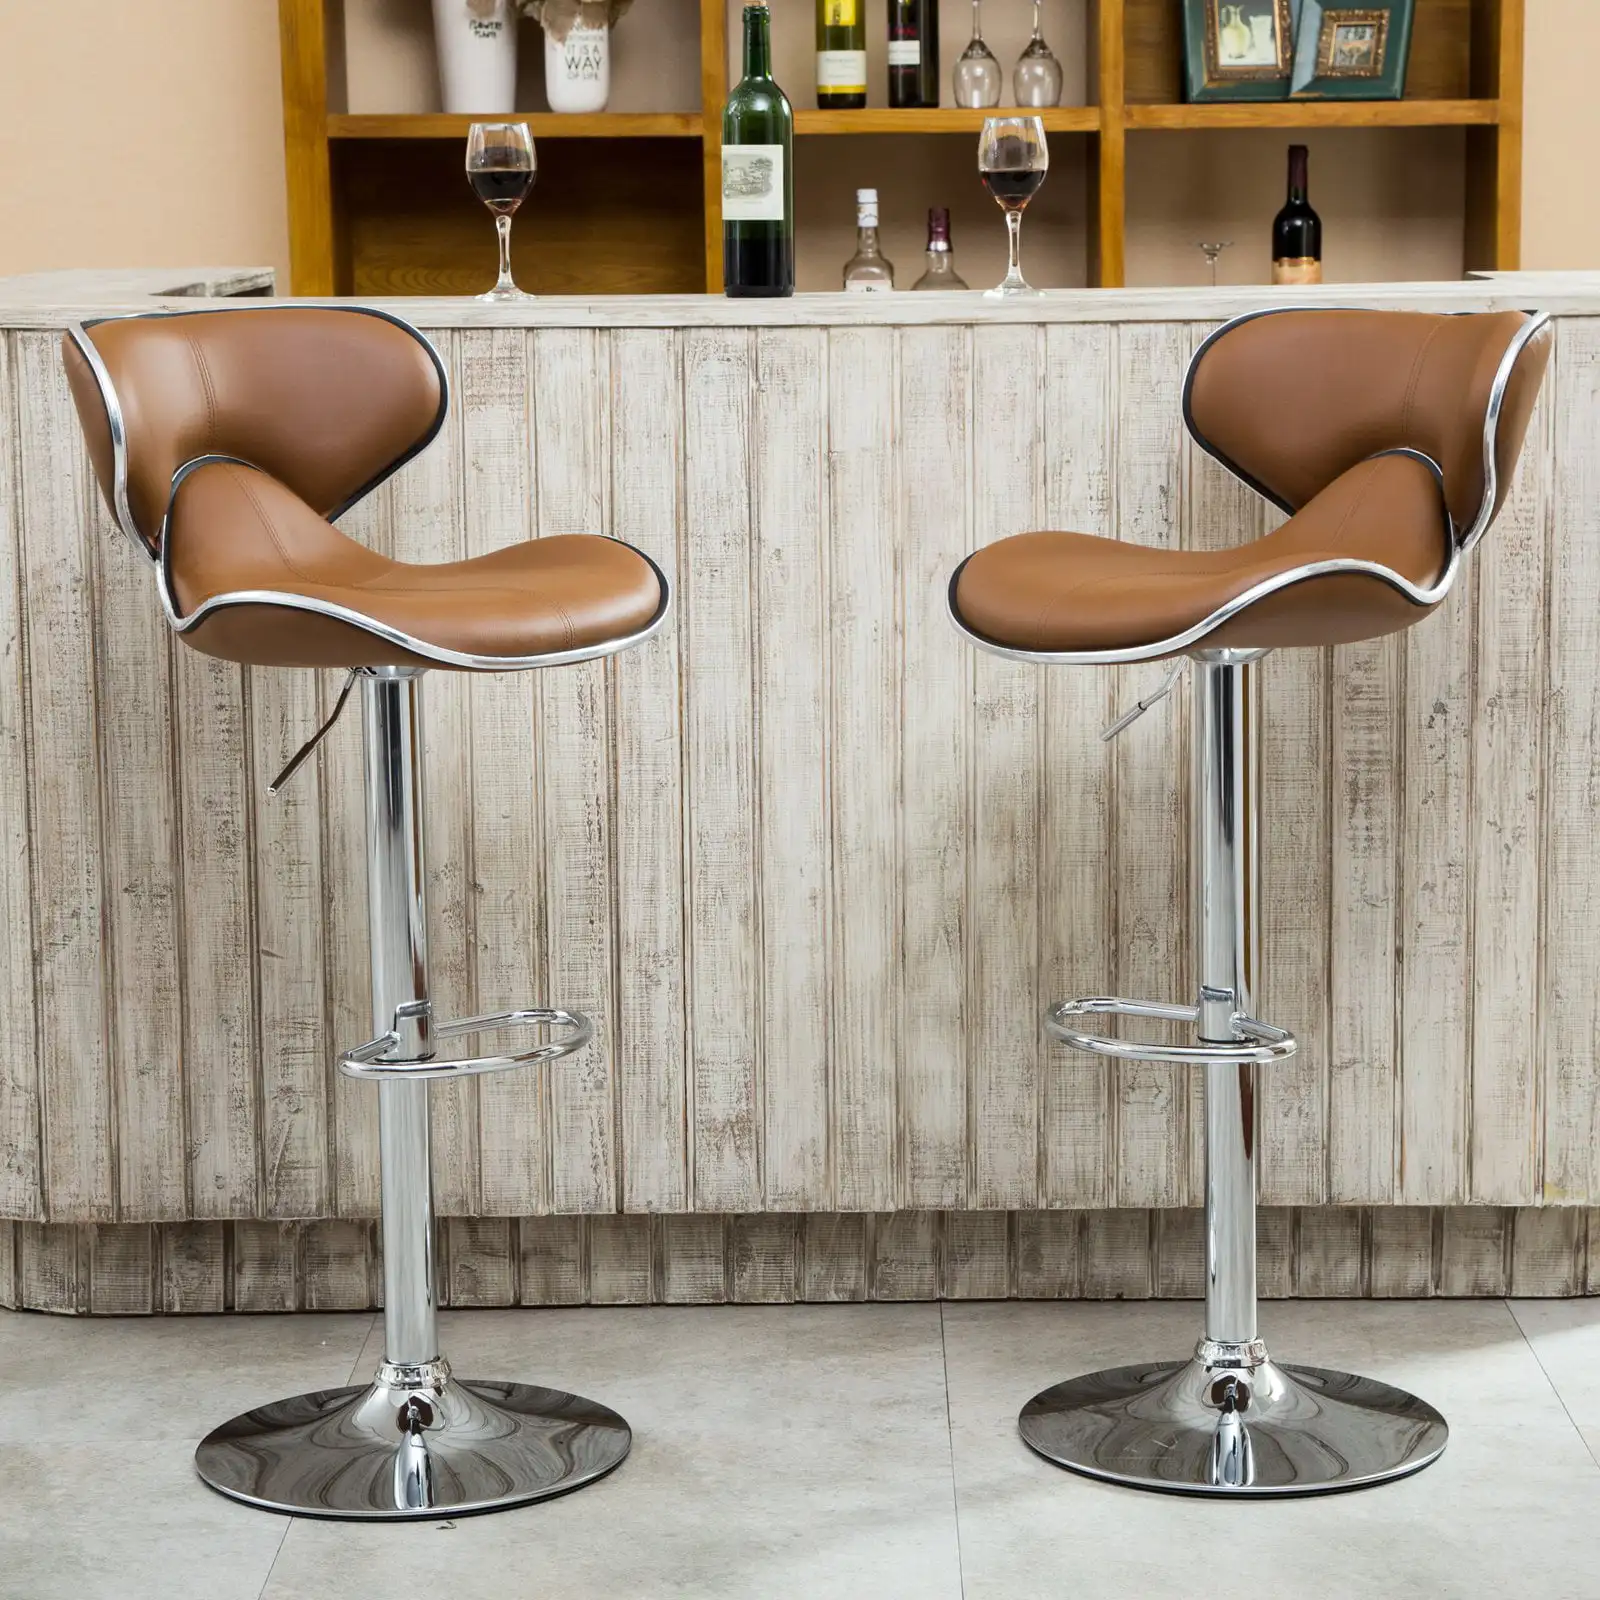 

Bar Stool with Adjustable Height & Swivel, Black, Set of 2 Counter Height Bar Stools Barstools Barstool Bar Chair